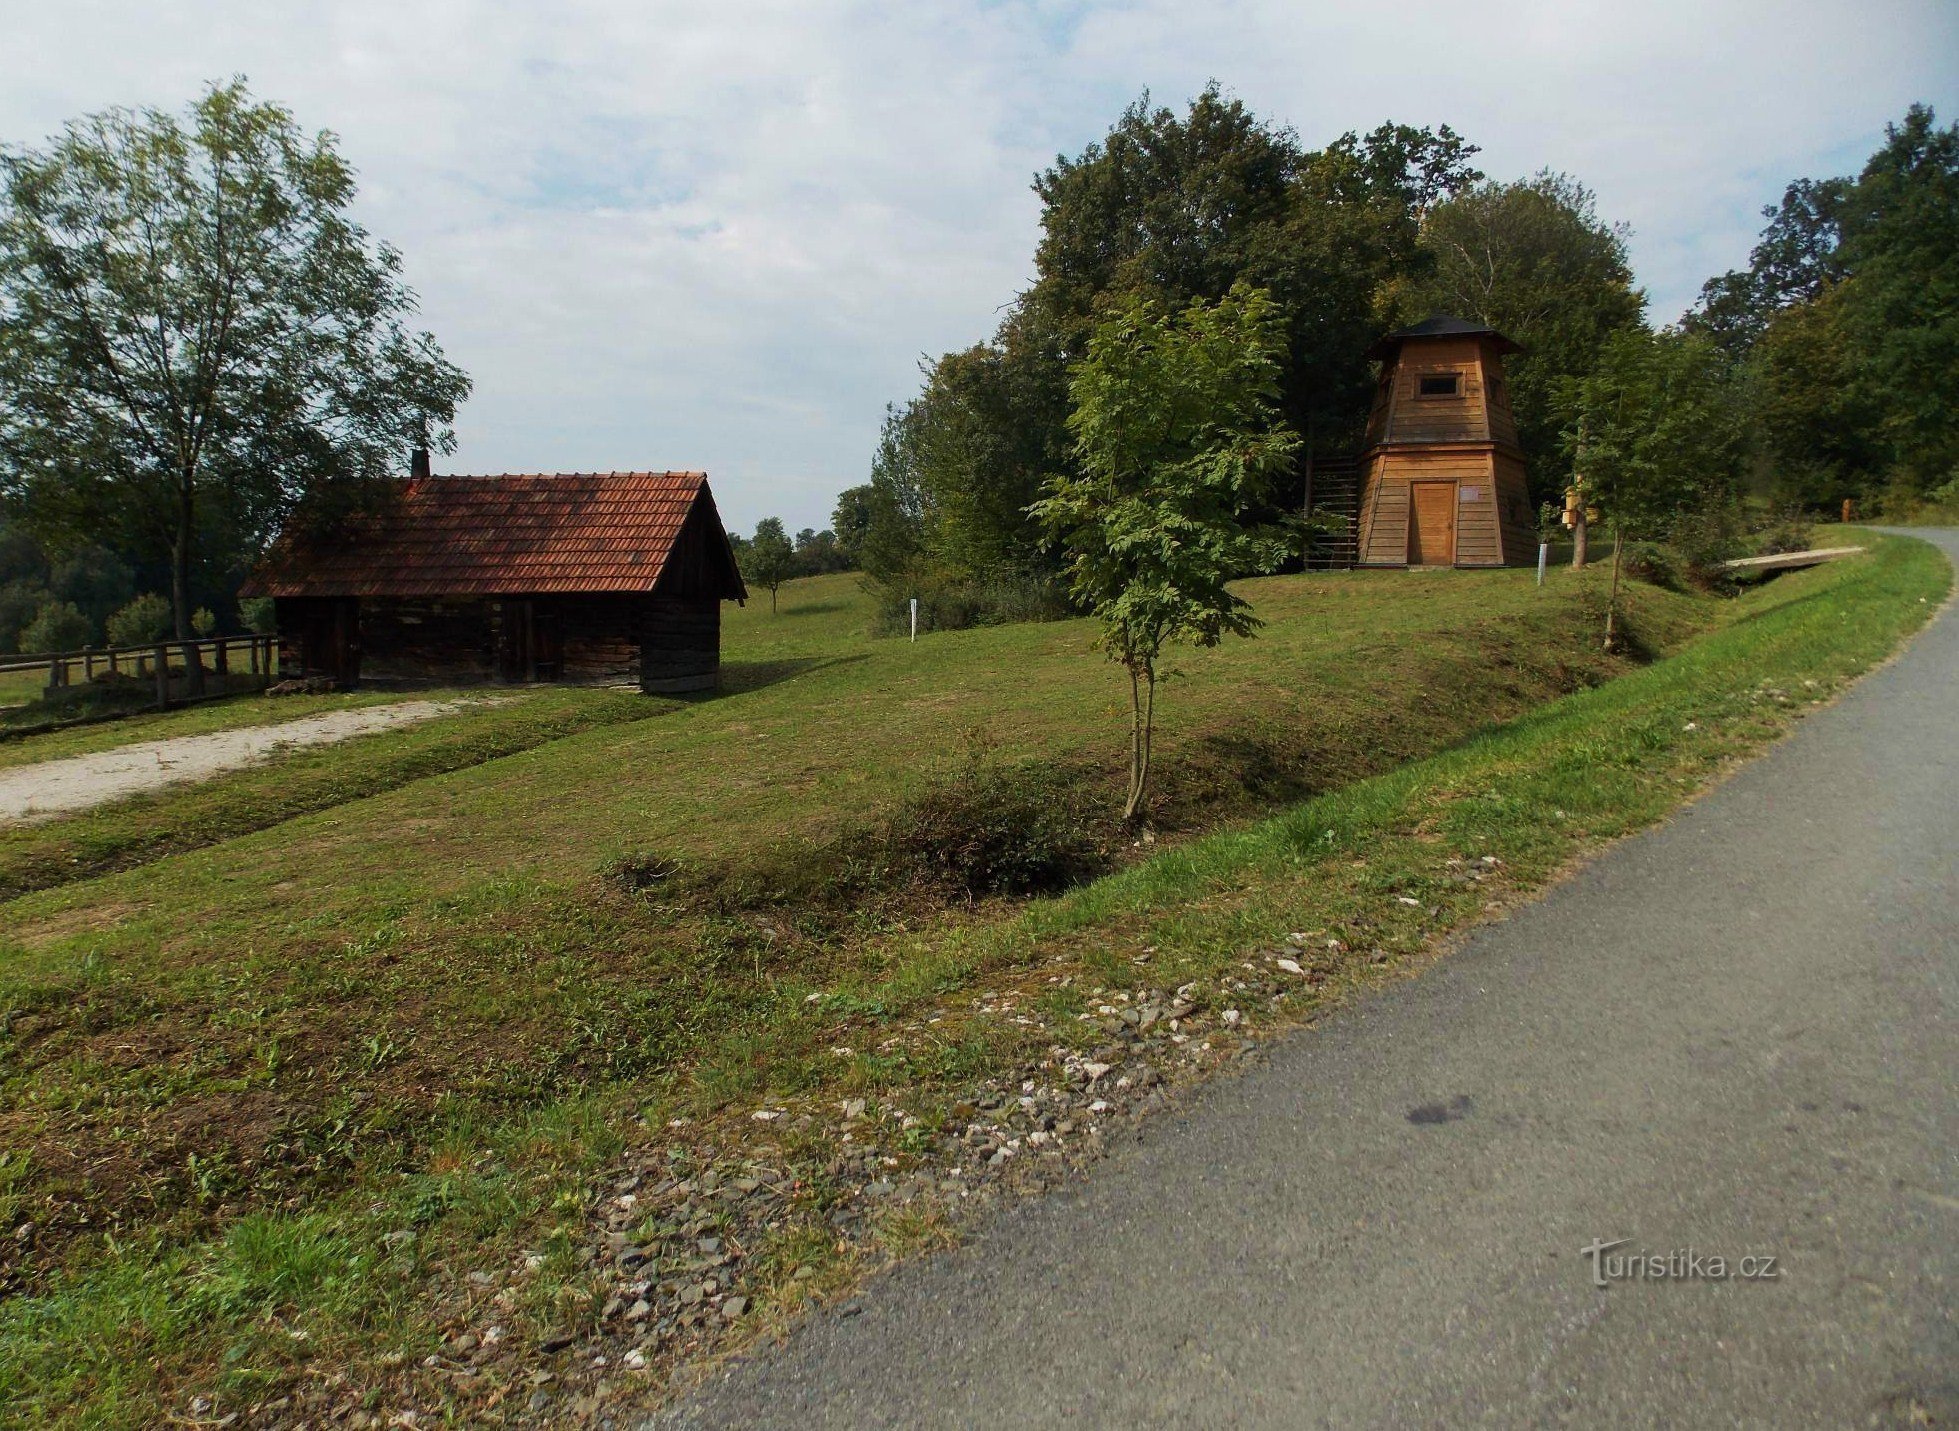 Chuyến đi đến Envicentrum ở Vysoké Pol